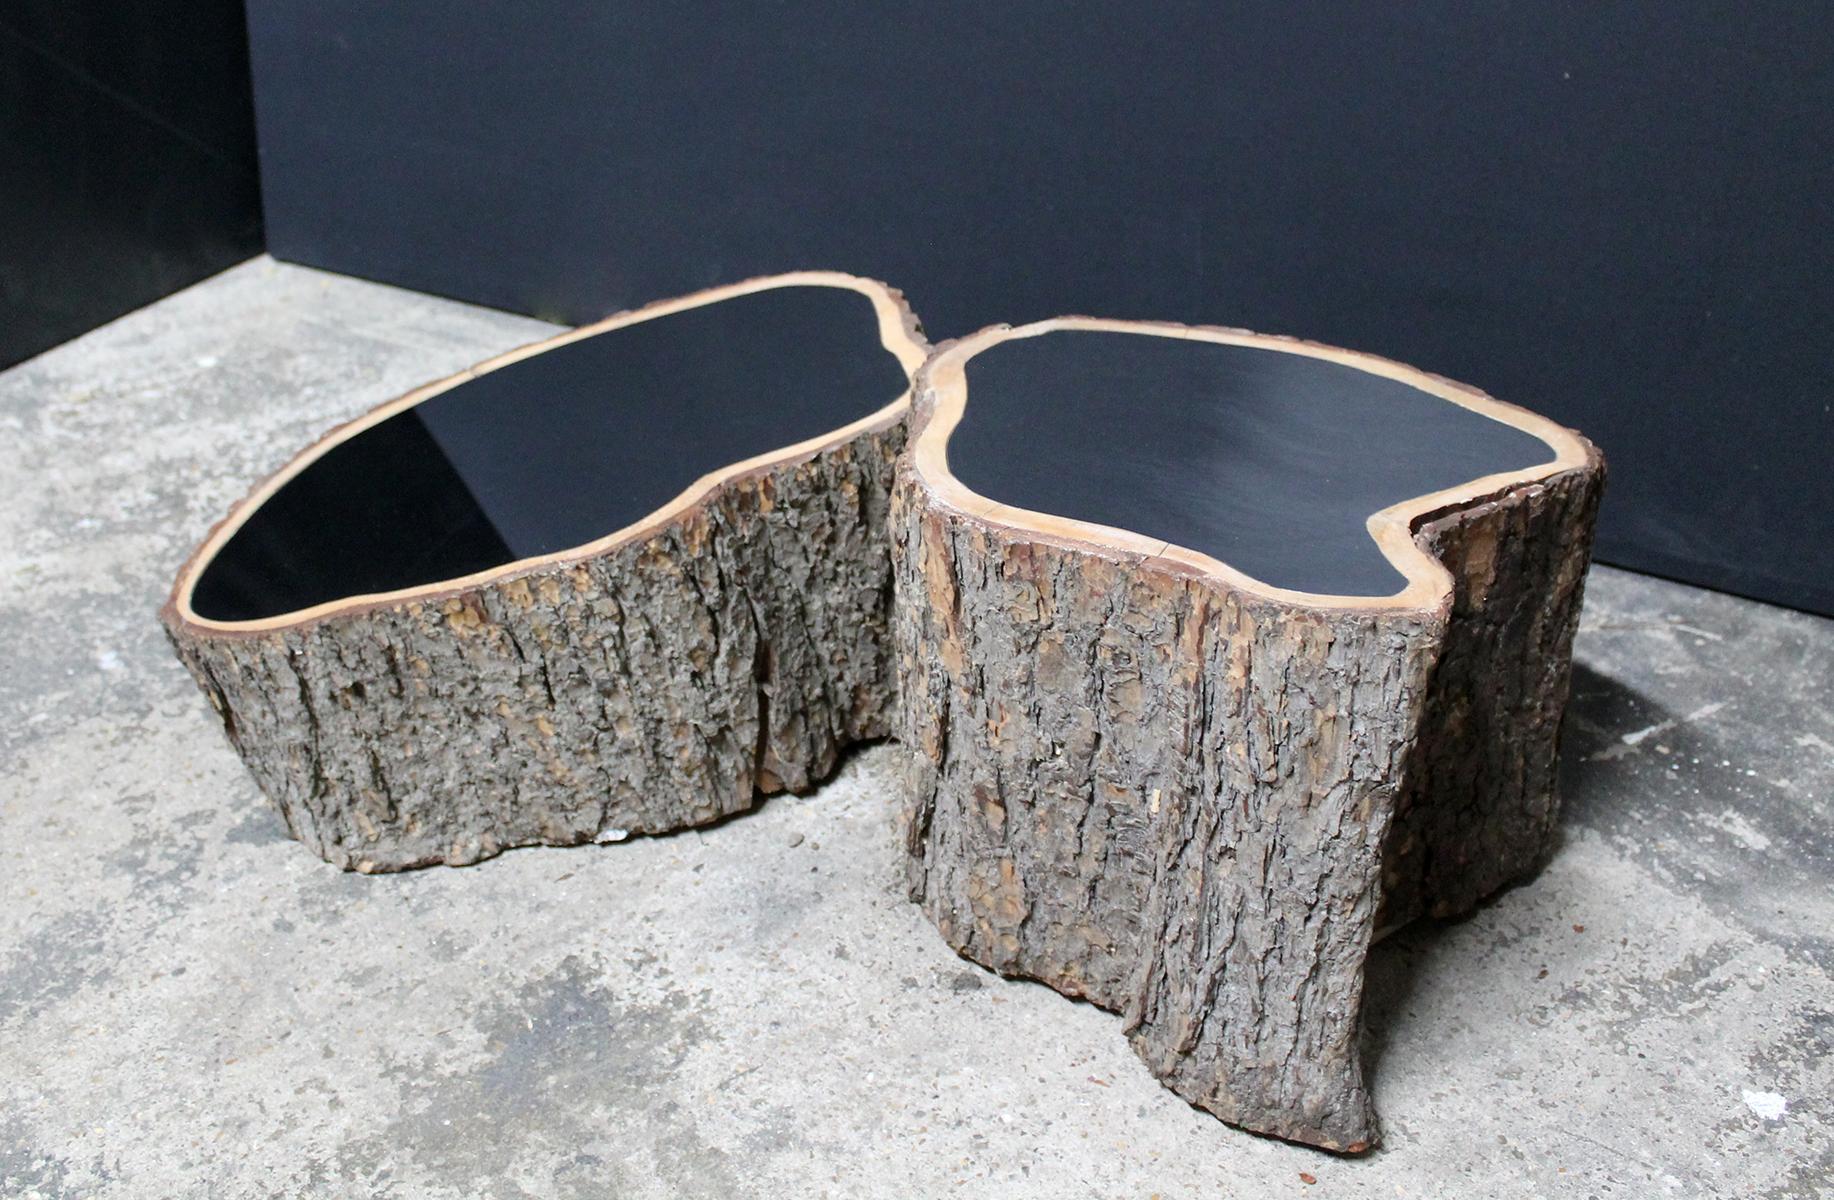 Cedar V: Sculptural floor or garden installation piece by Lee Borthwick For Sale 2